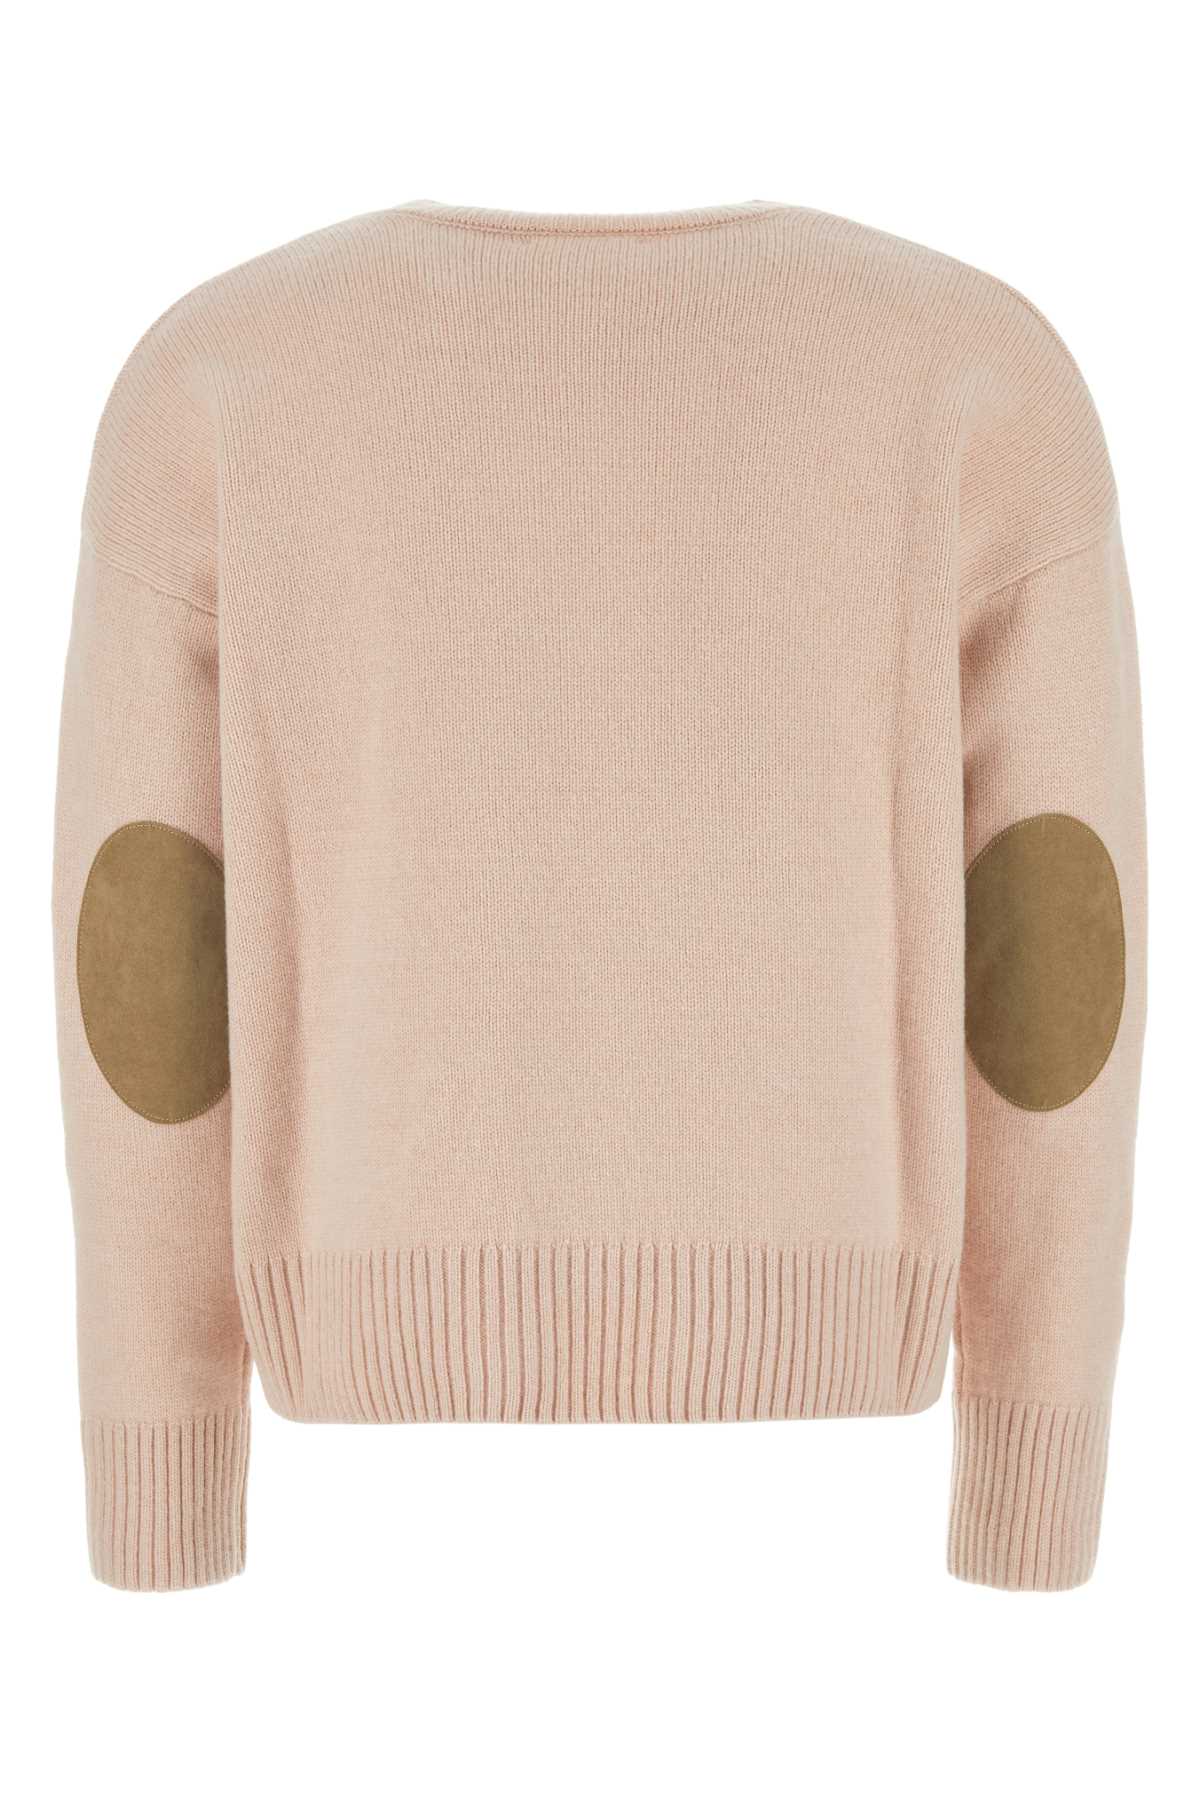 Ami Alexandre Mattiussi Antiqued Pink Wool Blend Sweater In Powderpink